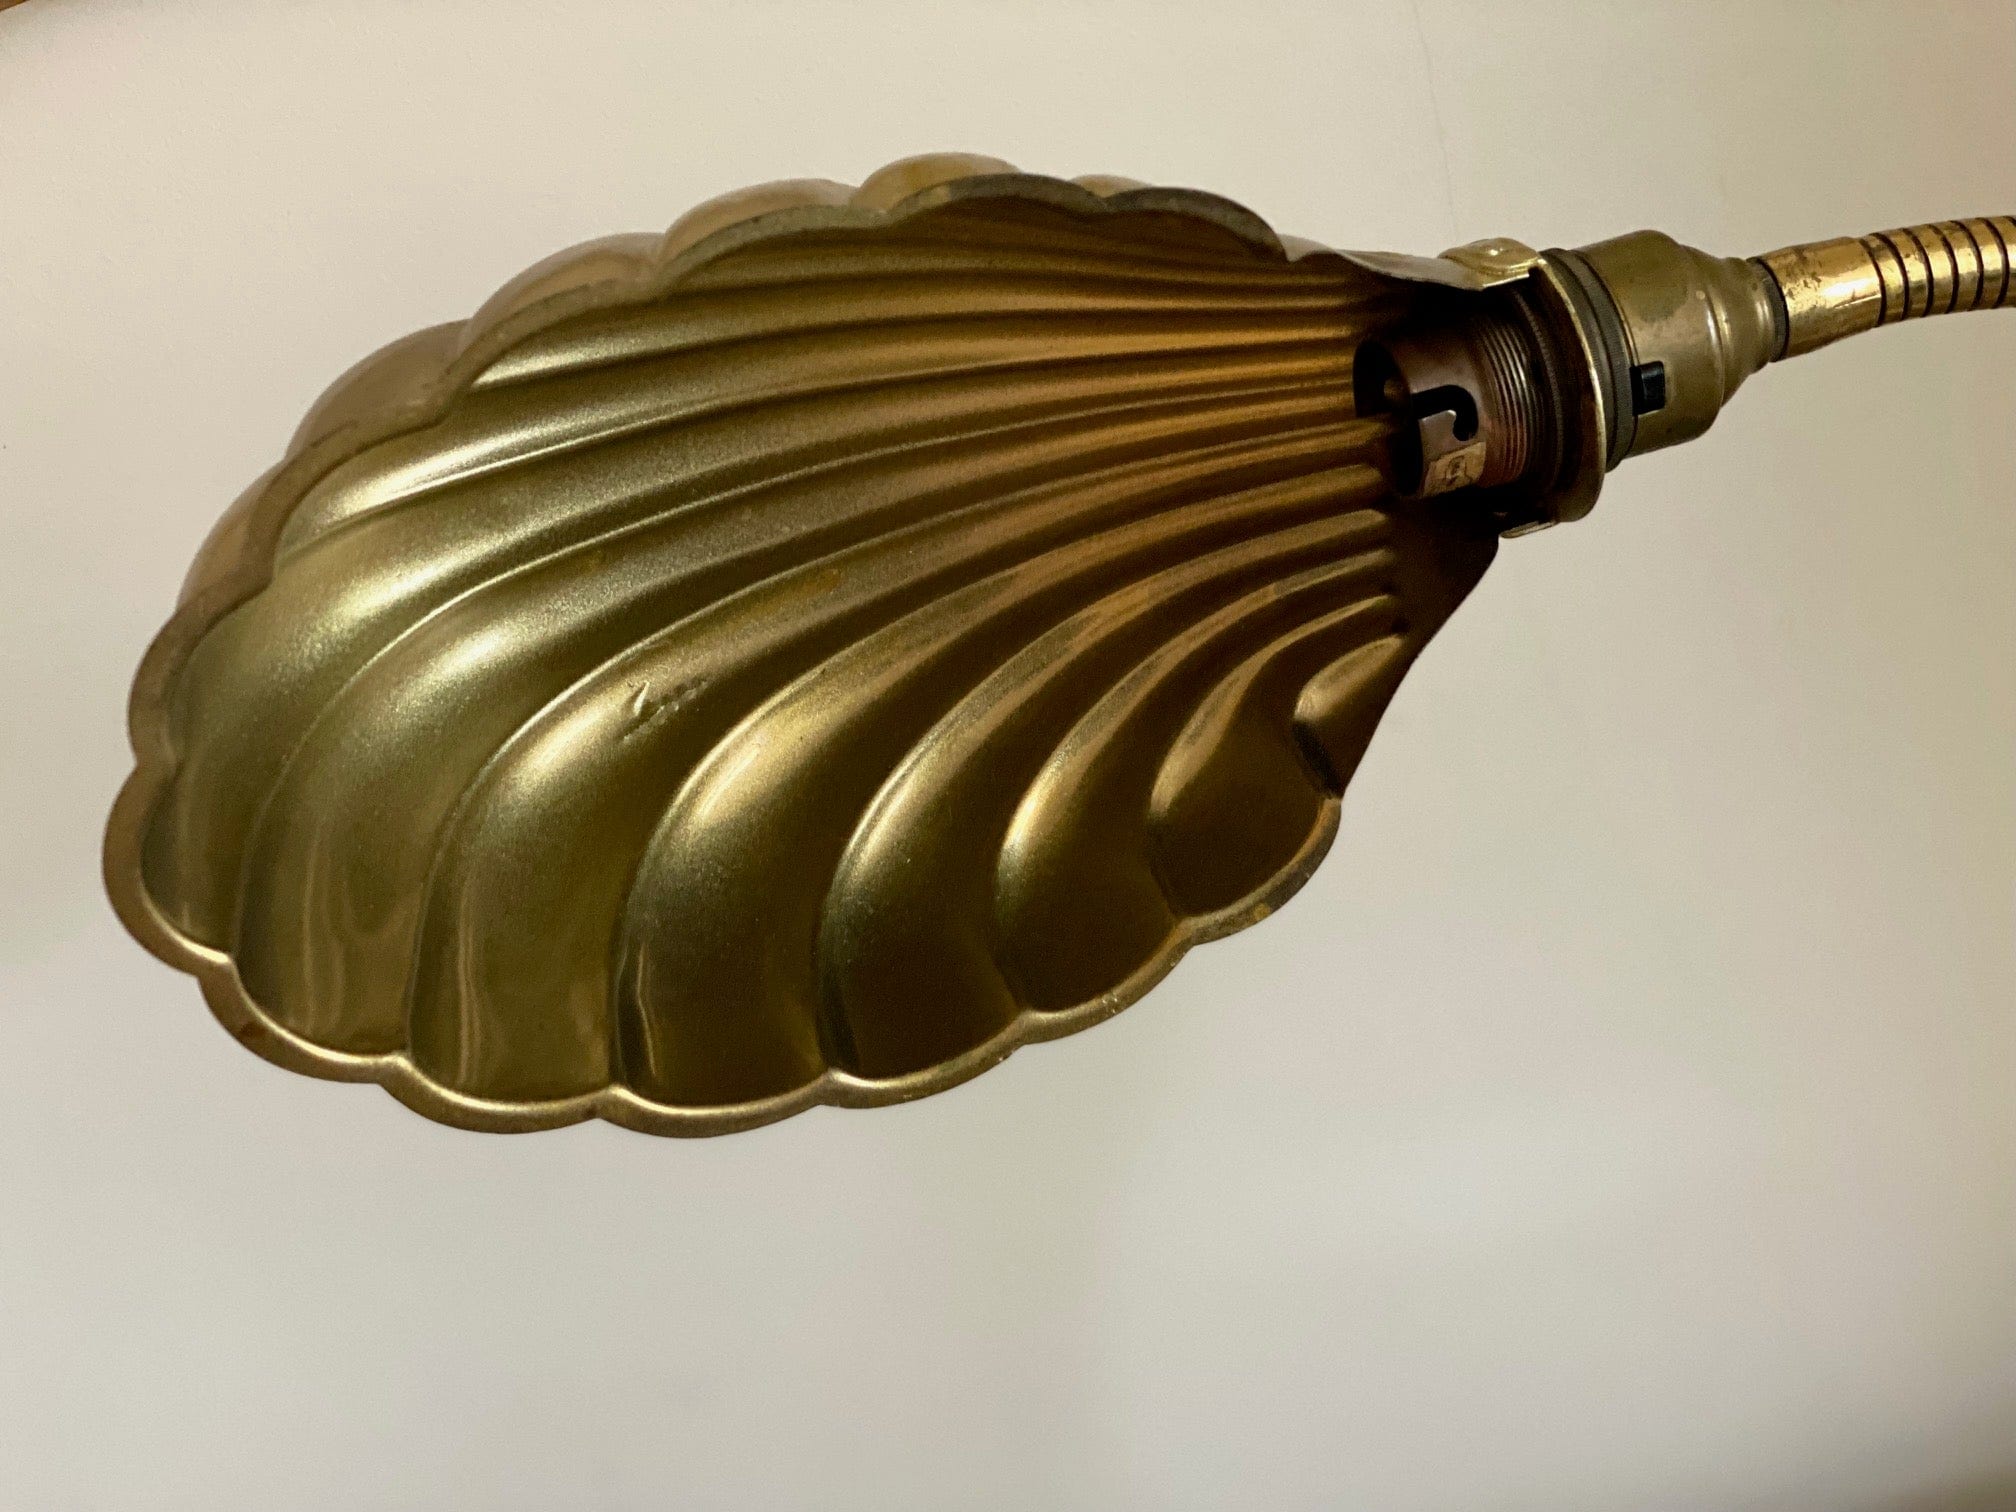 ANTIQUE VINTAGE SOLID Brass Lamp Neck Spacer Light Part $14.95 - PicClick